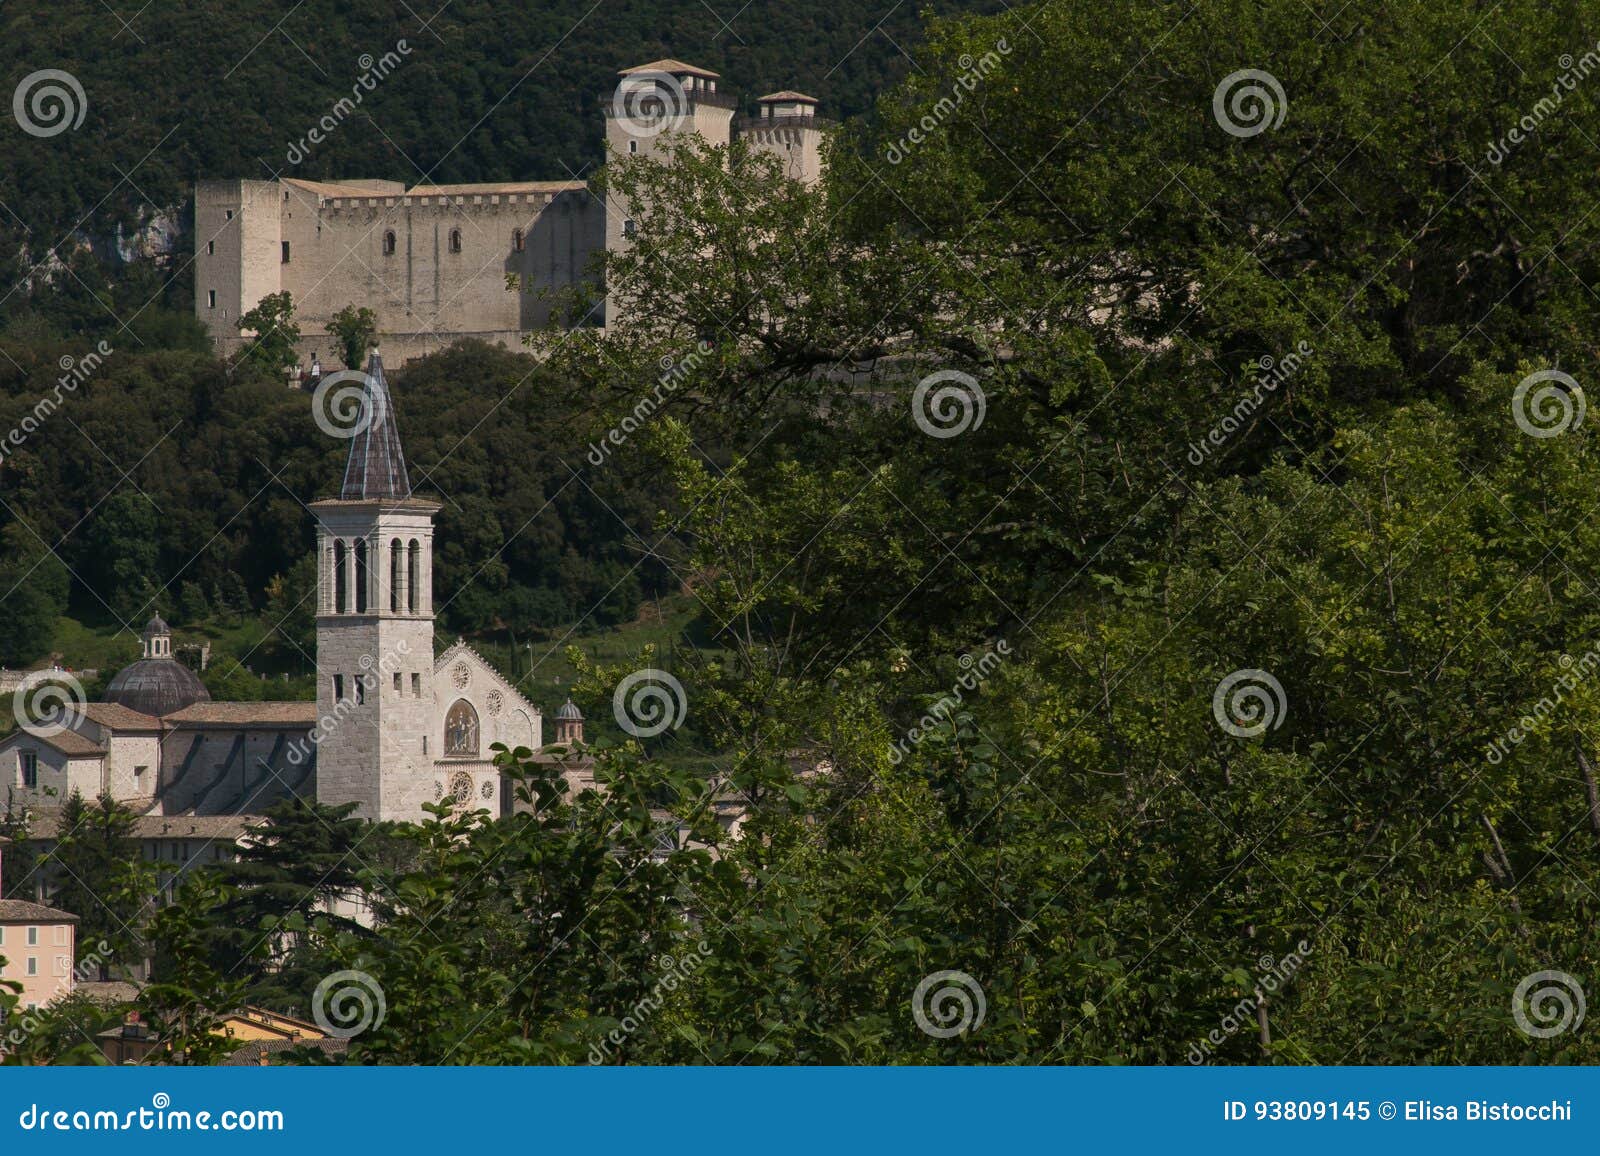 the albornoz rocca and the cathedral of spoleto